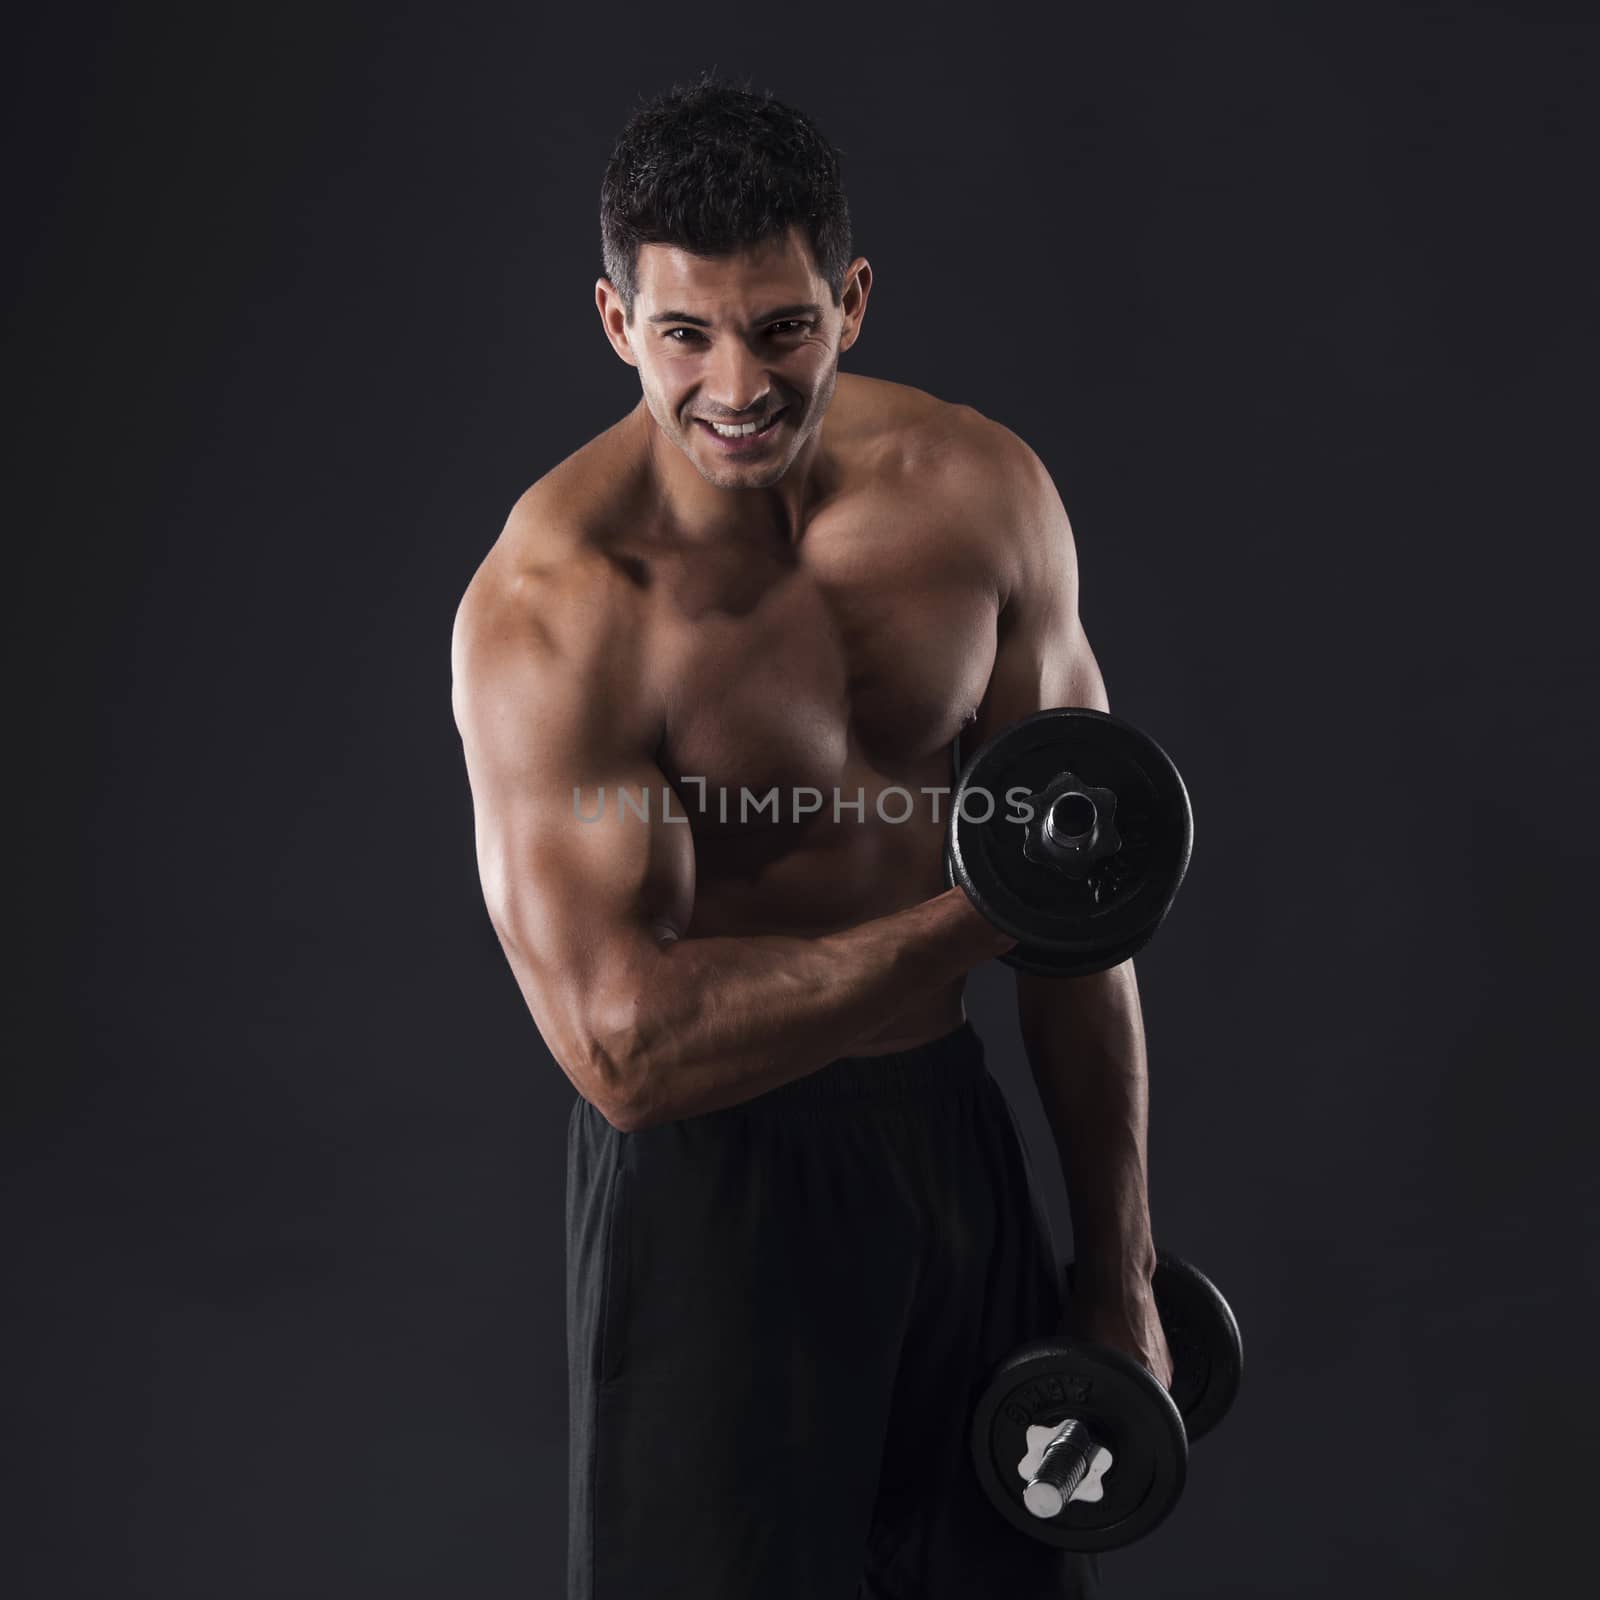 Muscular man lifting weights by Iko